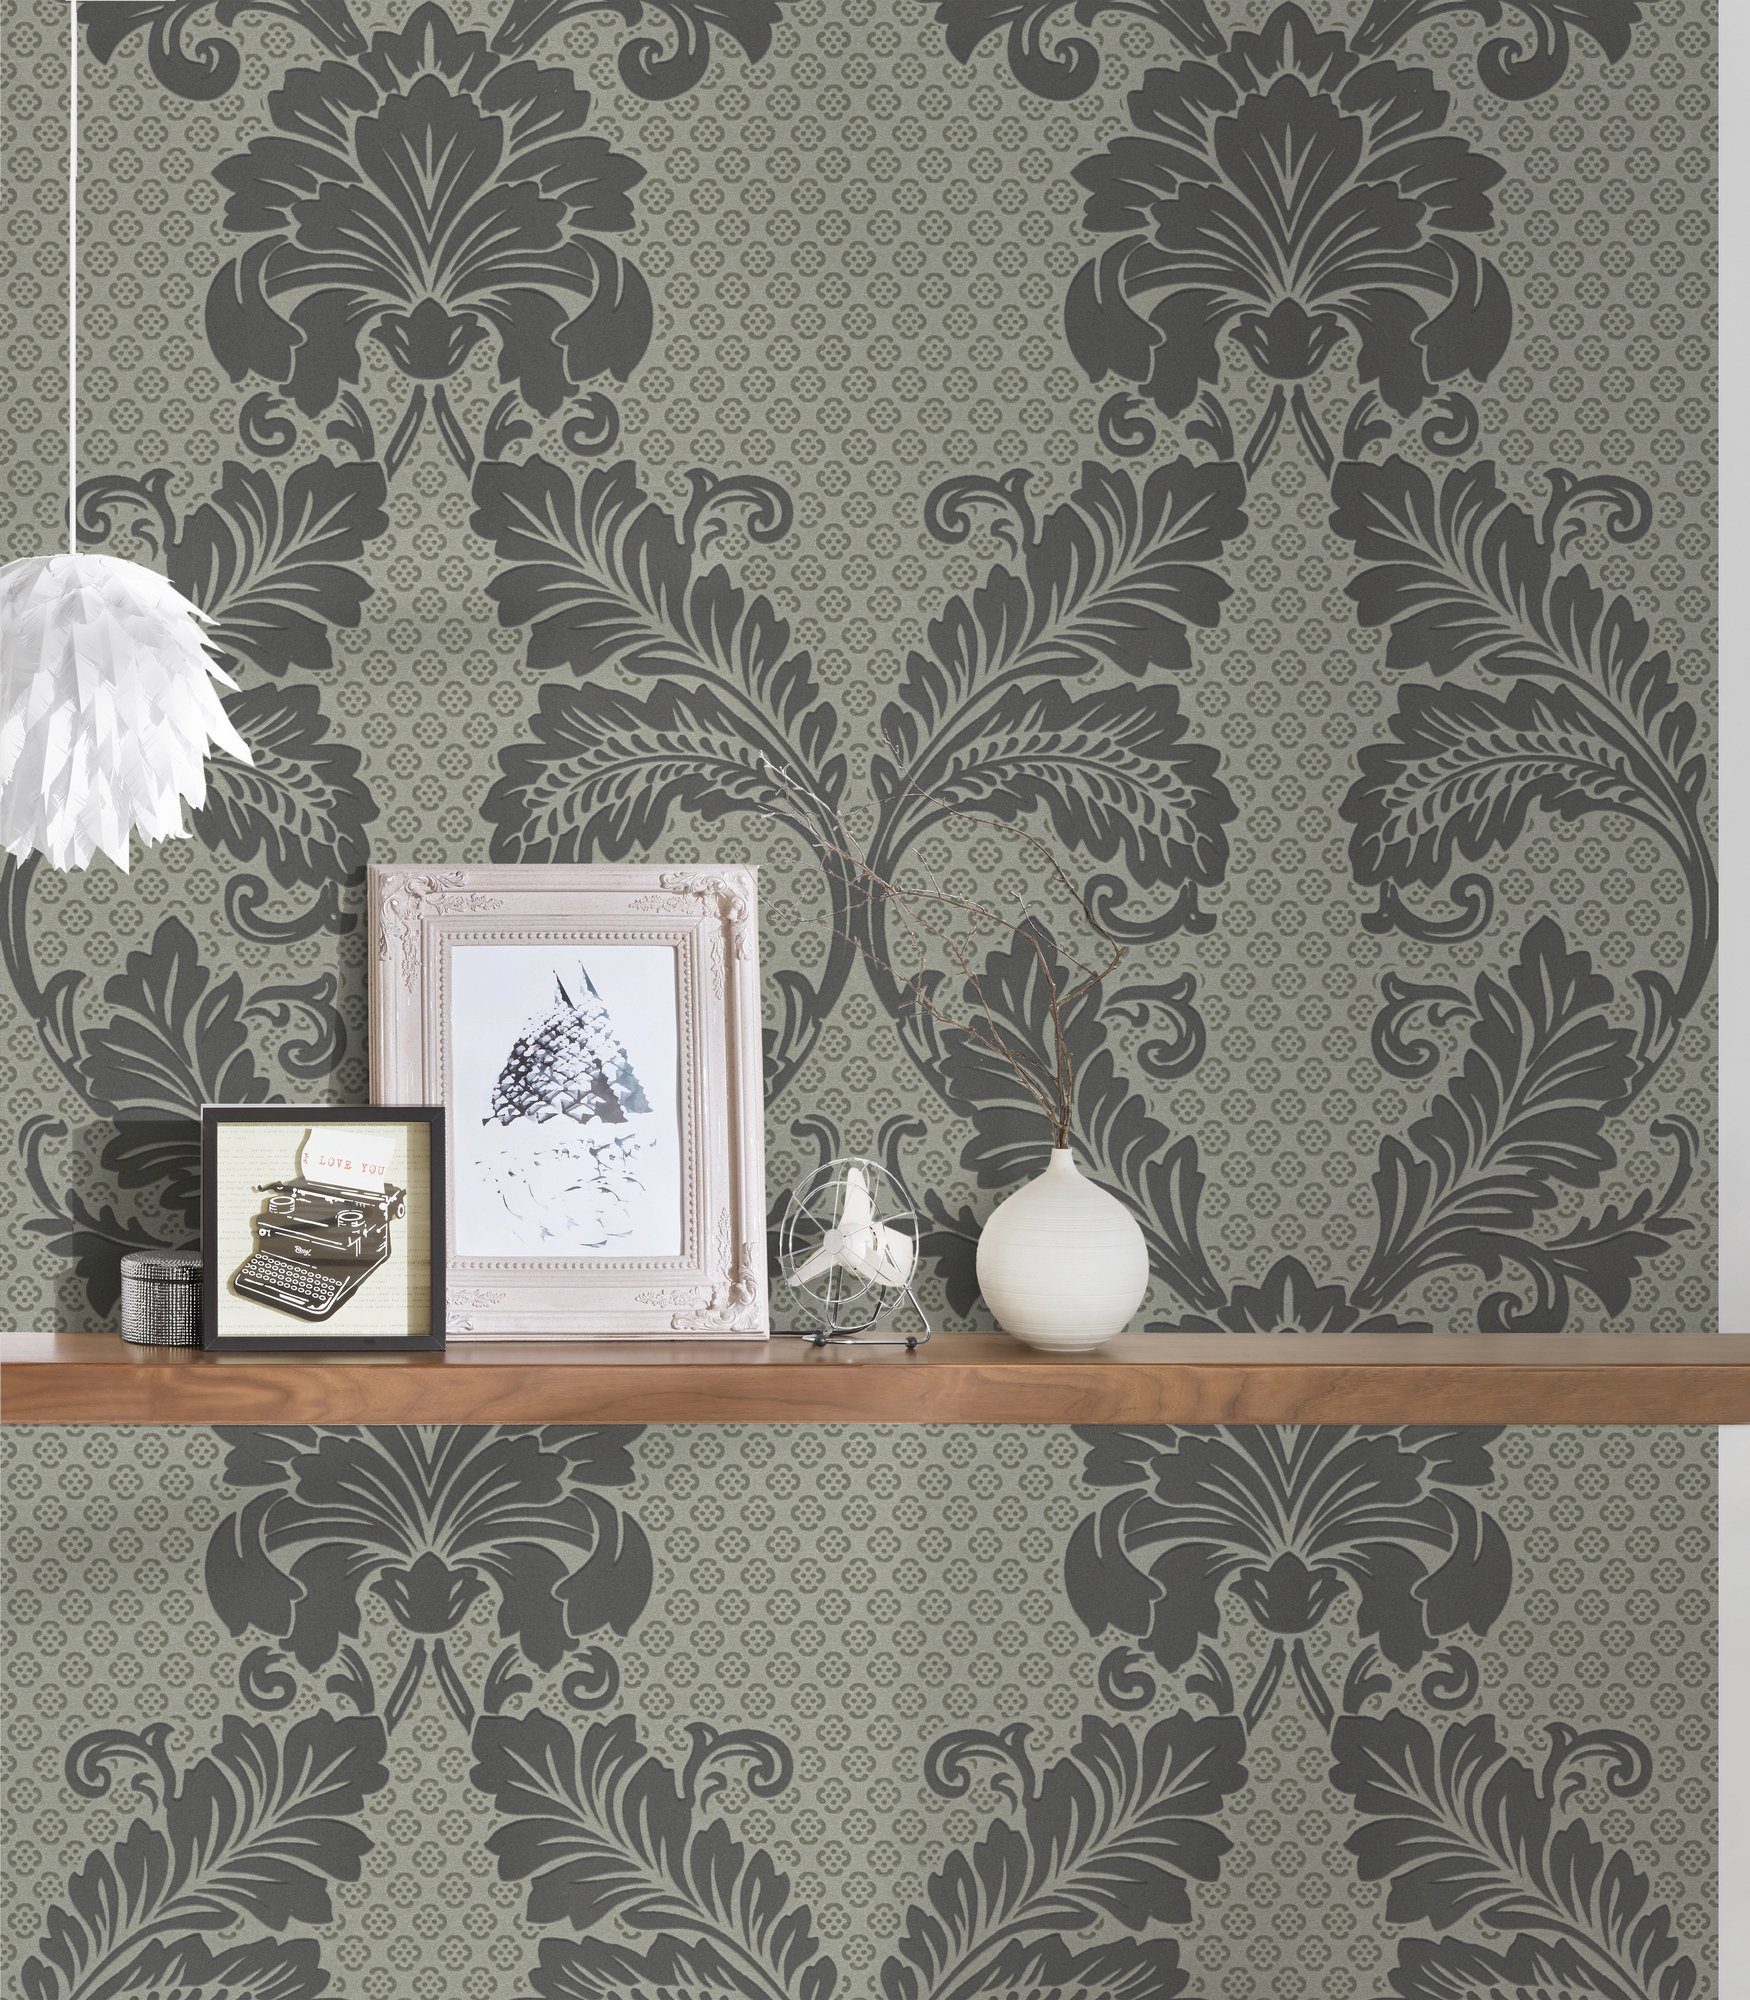 Vliestapete Ornament Luxury Barock, beflockt, Tapete Création A.S. Architects Barock Paper wallpaper, grau/bronzefarben